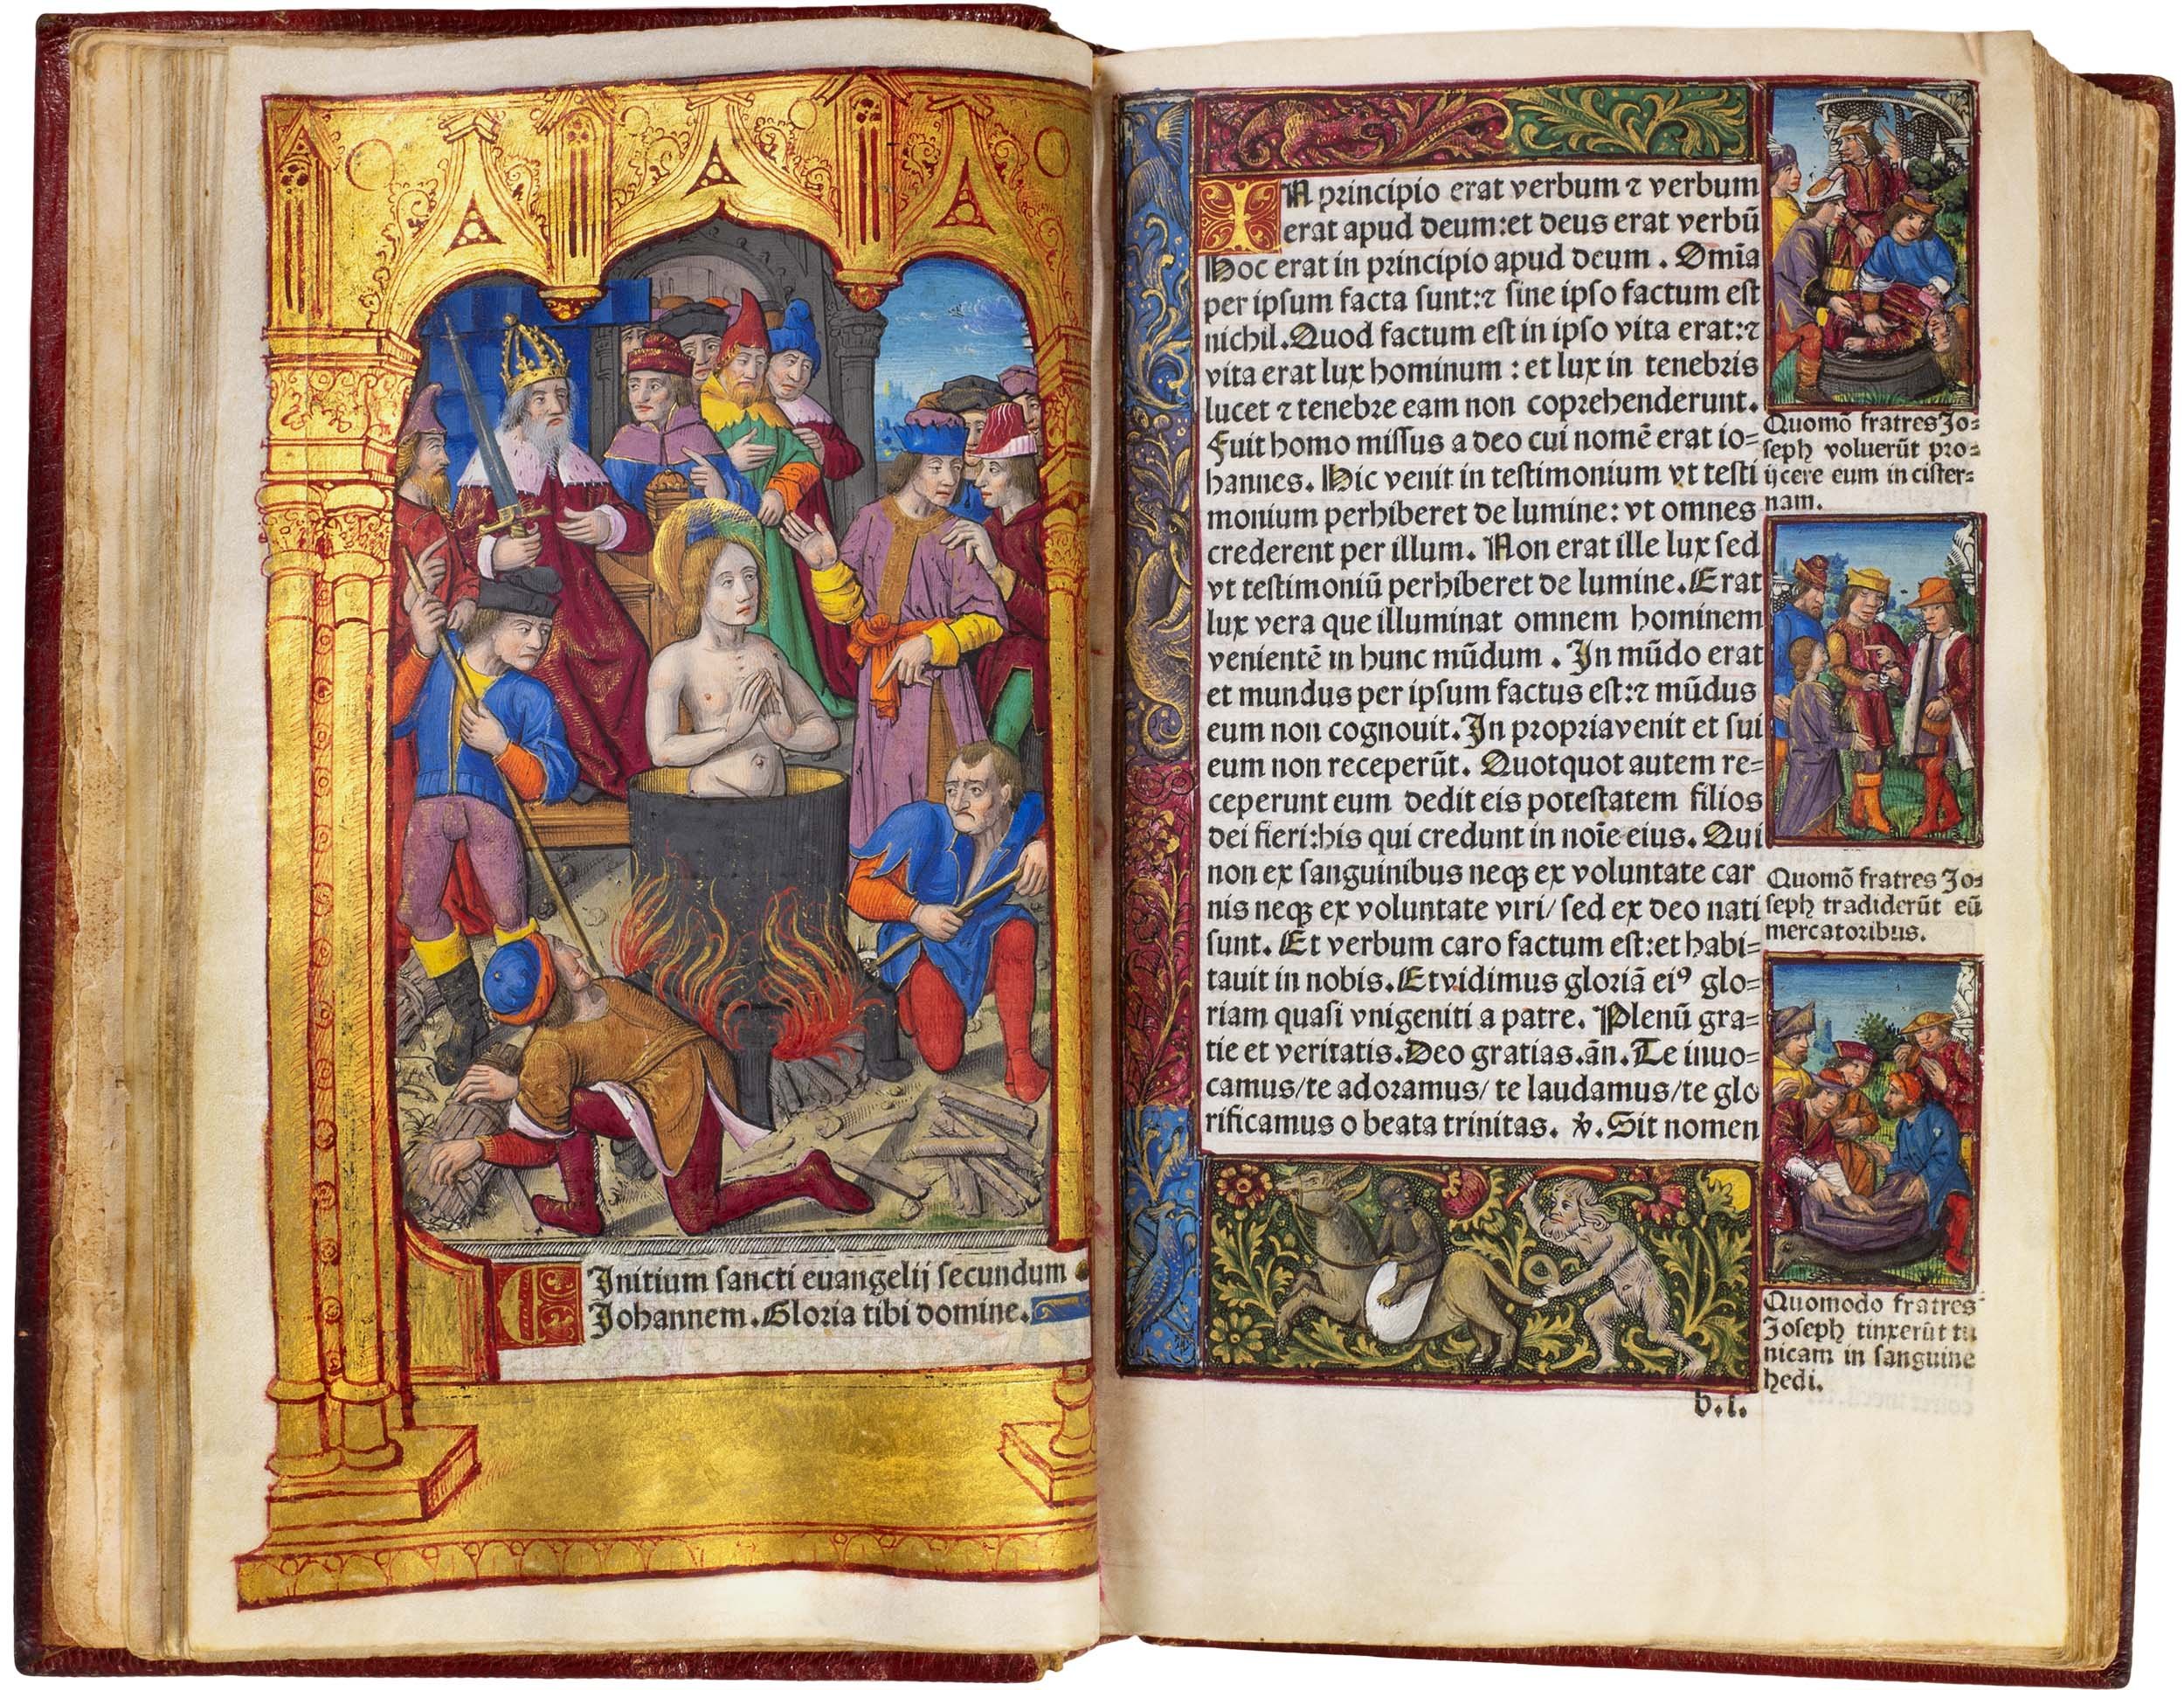 Horae-bmv-book-of-hours-Louis-XII-martainville-master-philippa-guelders-paris-pigouchet-vostre-15.10.1499-13.jpg